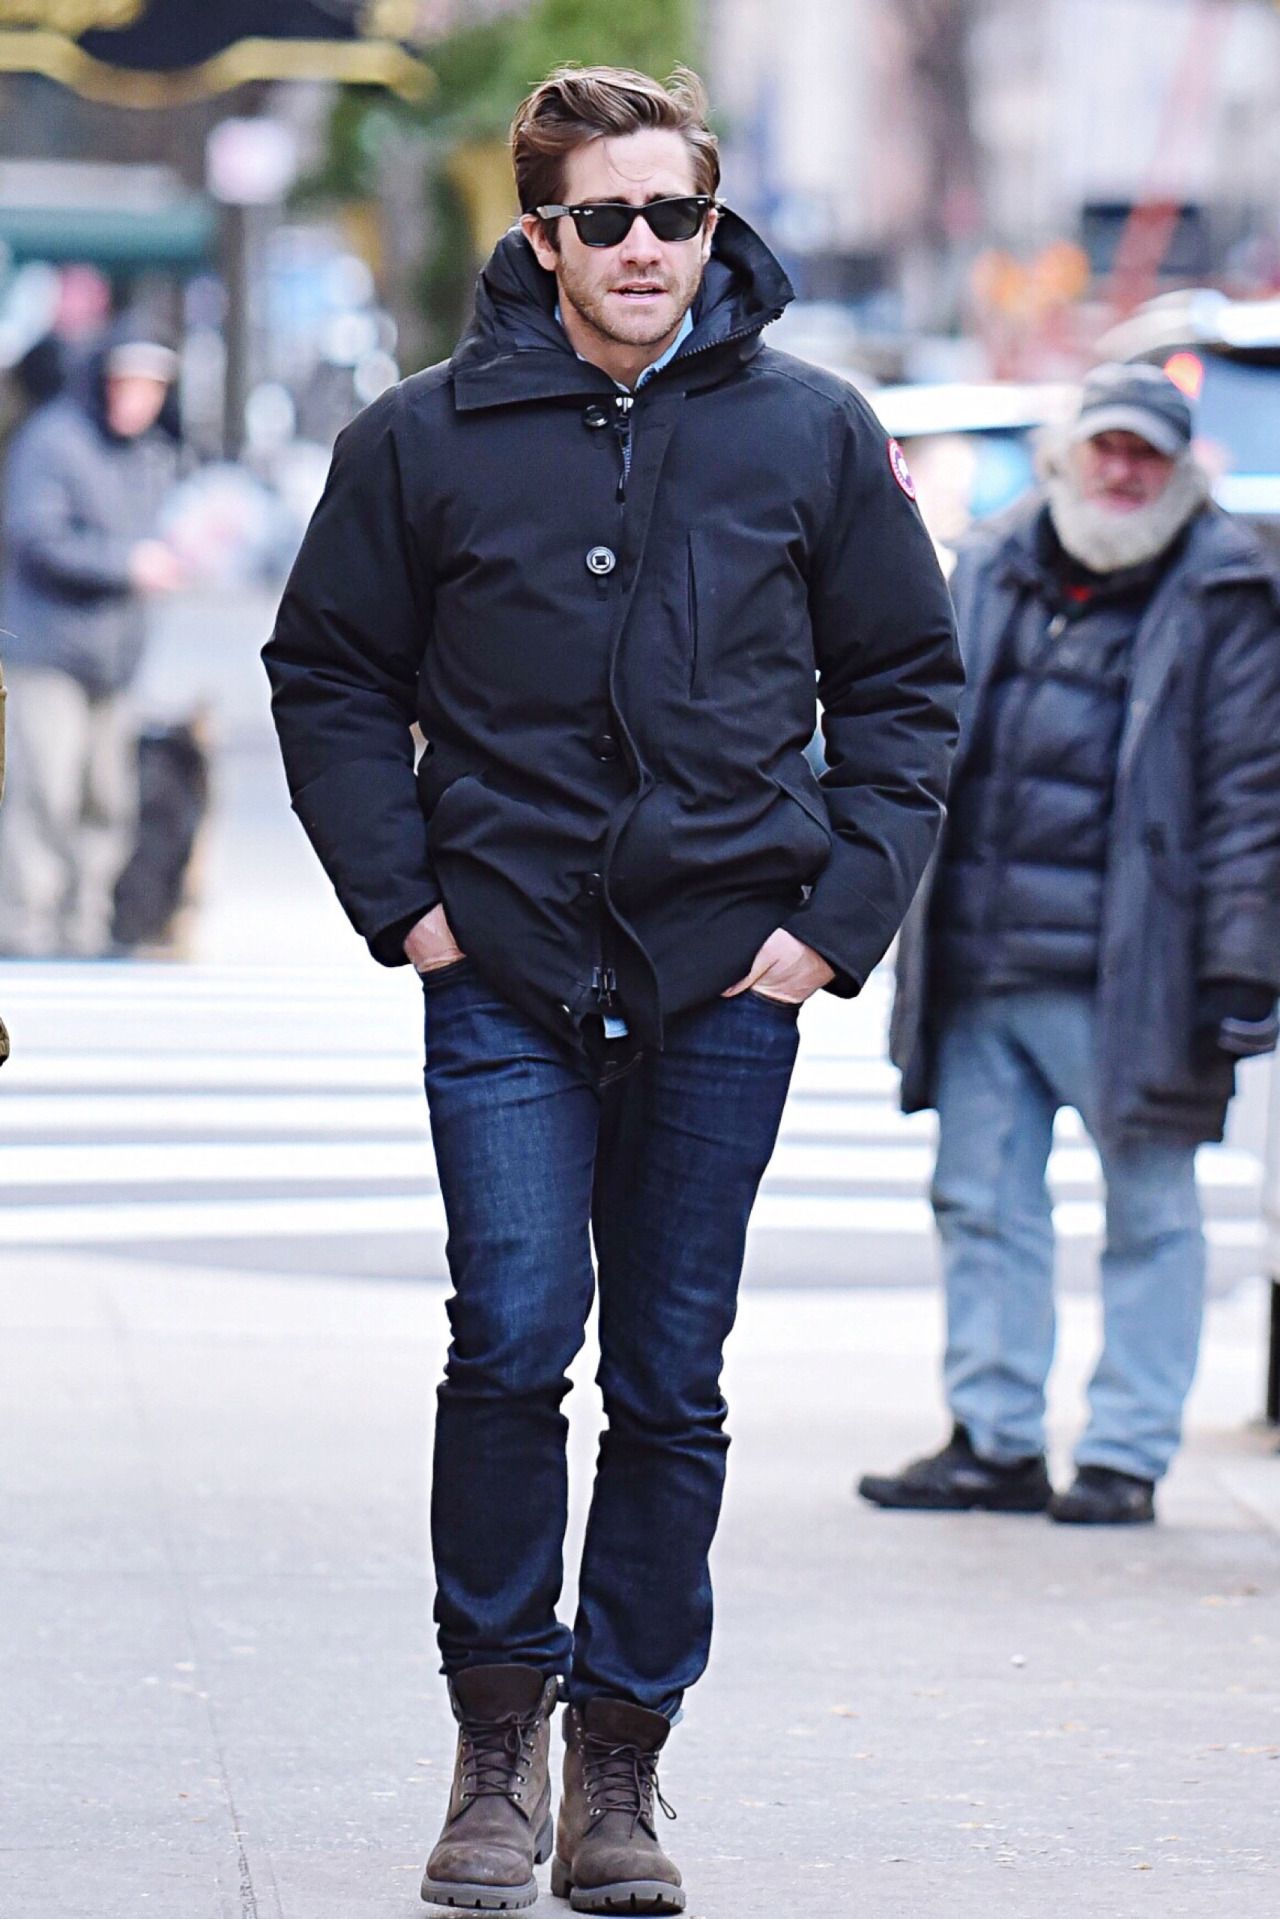 just-jake-gyllenhaal | Jake gyllenhaal, Jake, Well dressed men